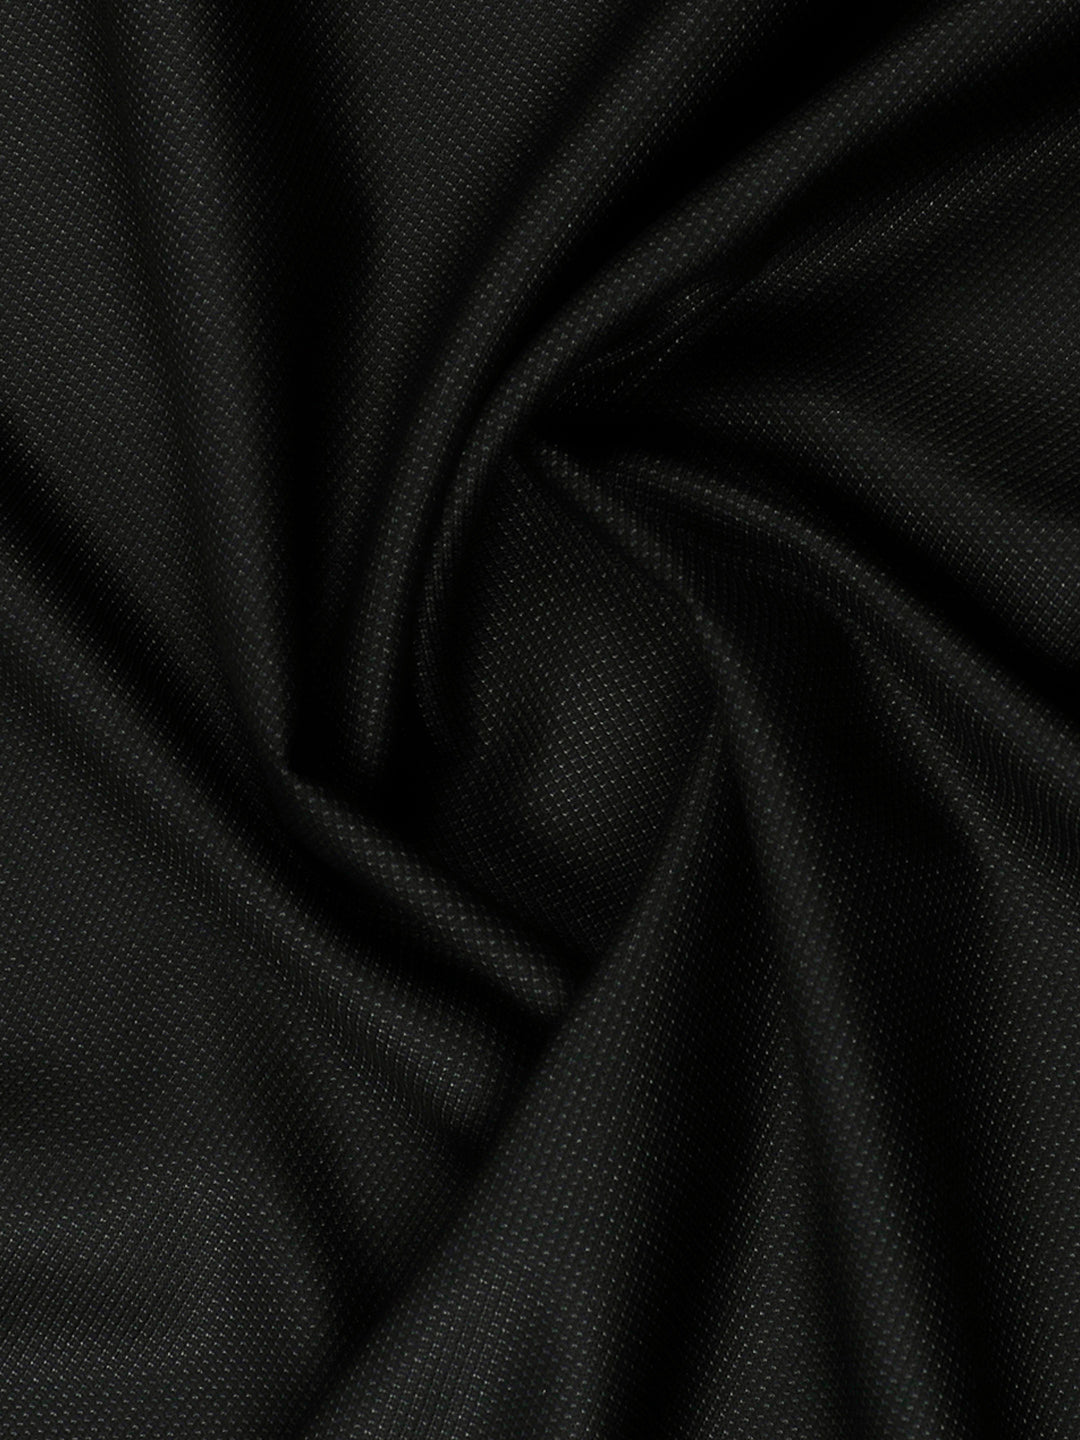 Comfortable Stretch Black Plain Pants Fabric Enable Stretch